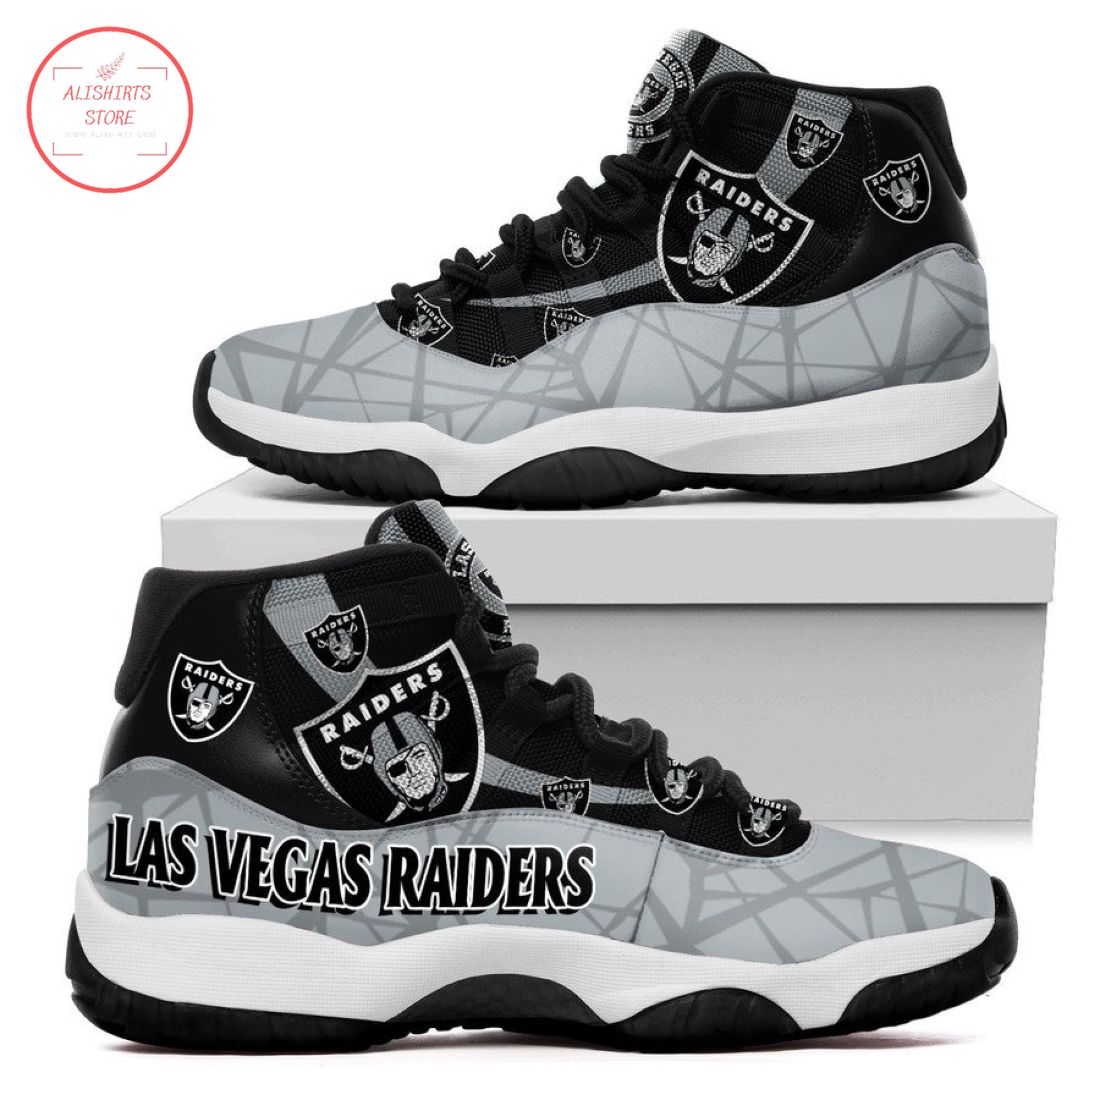 NFL Las Vegas Raiders New Air Jordan 11 Sneakers Shoes